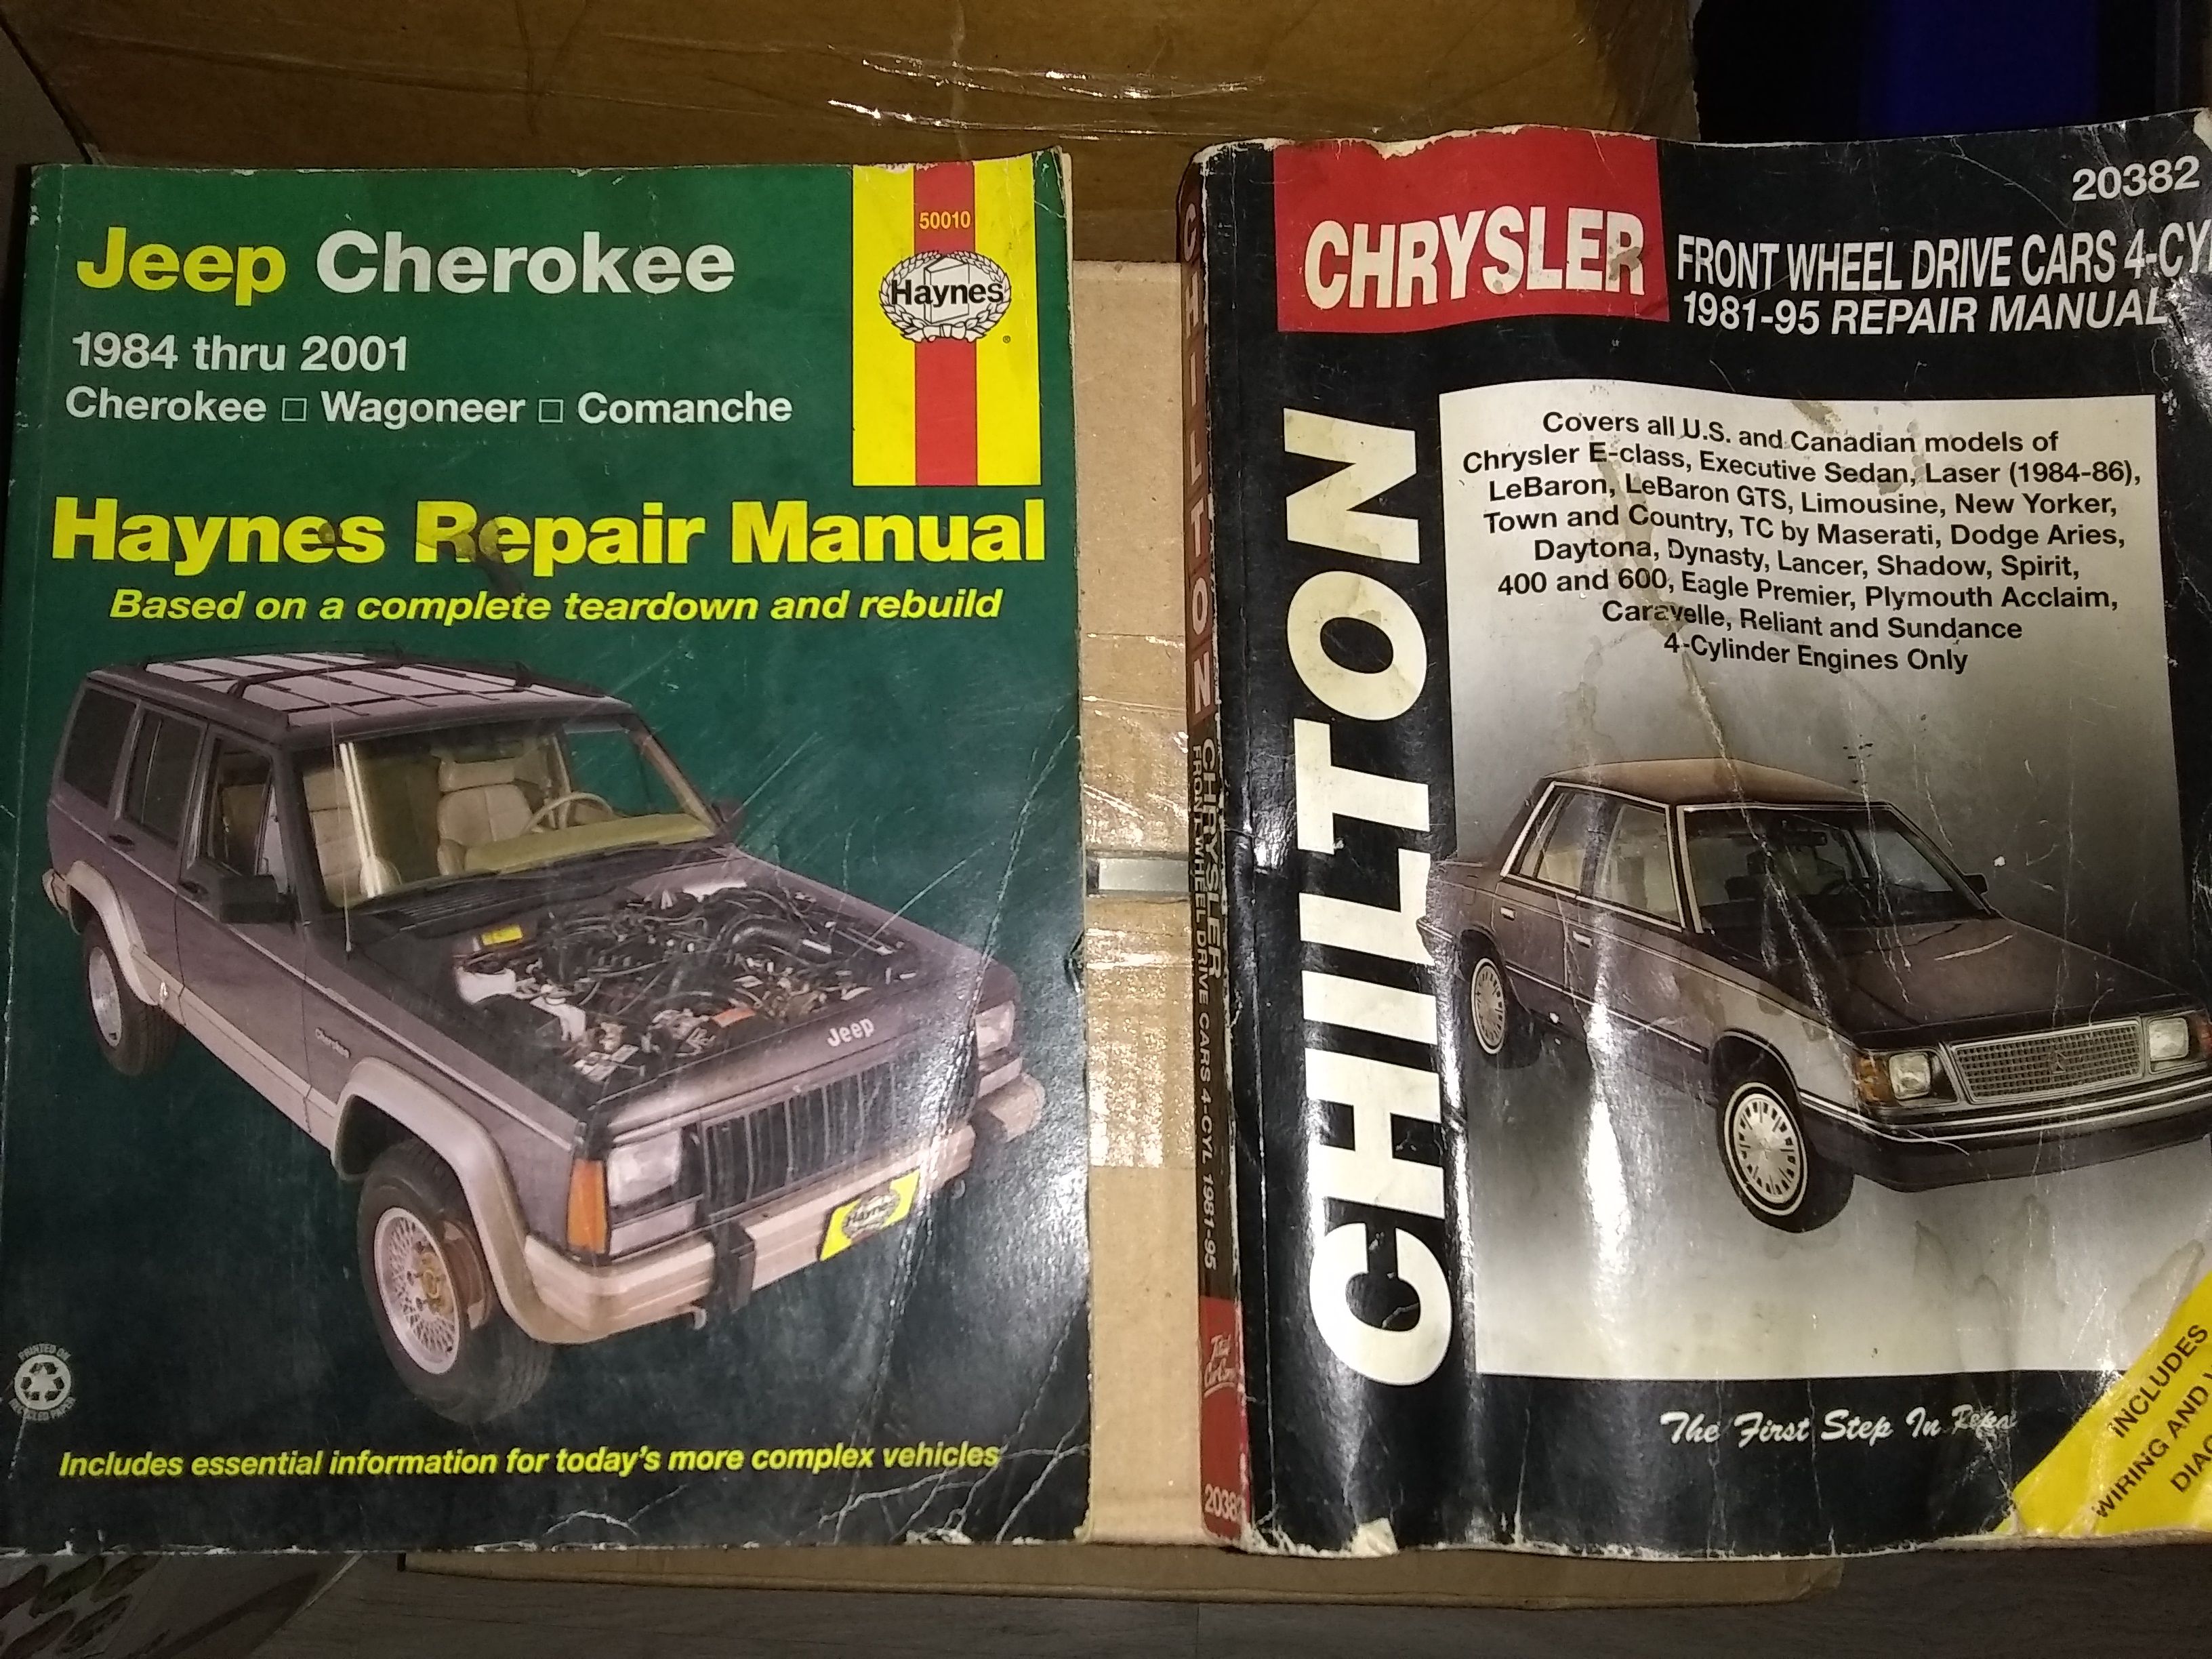 Automotive books